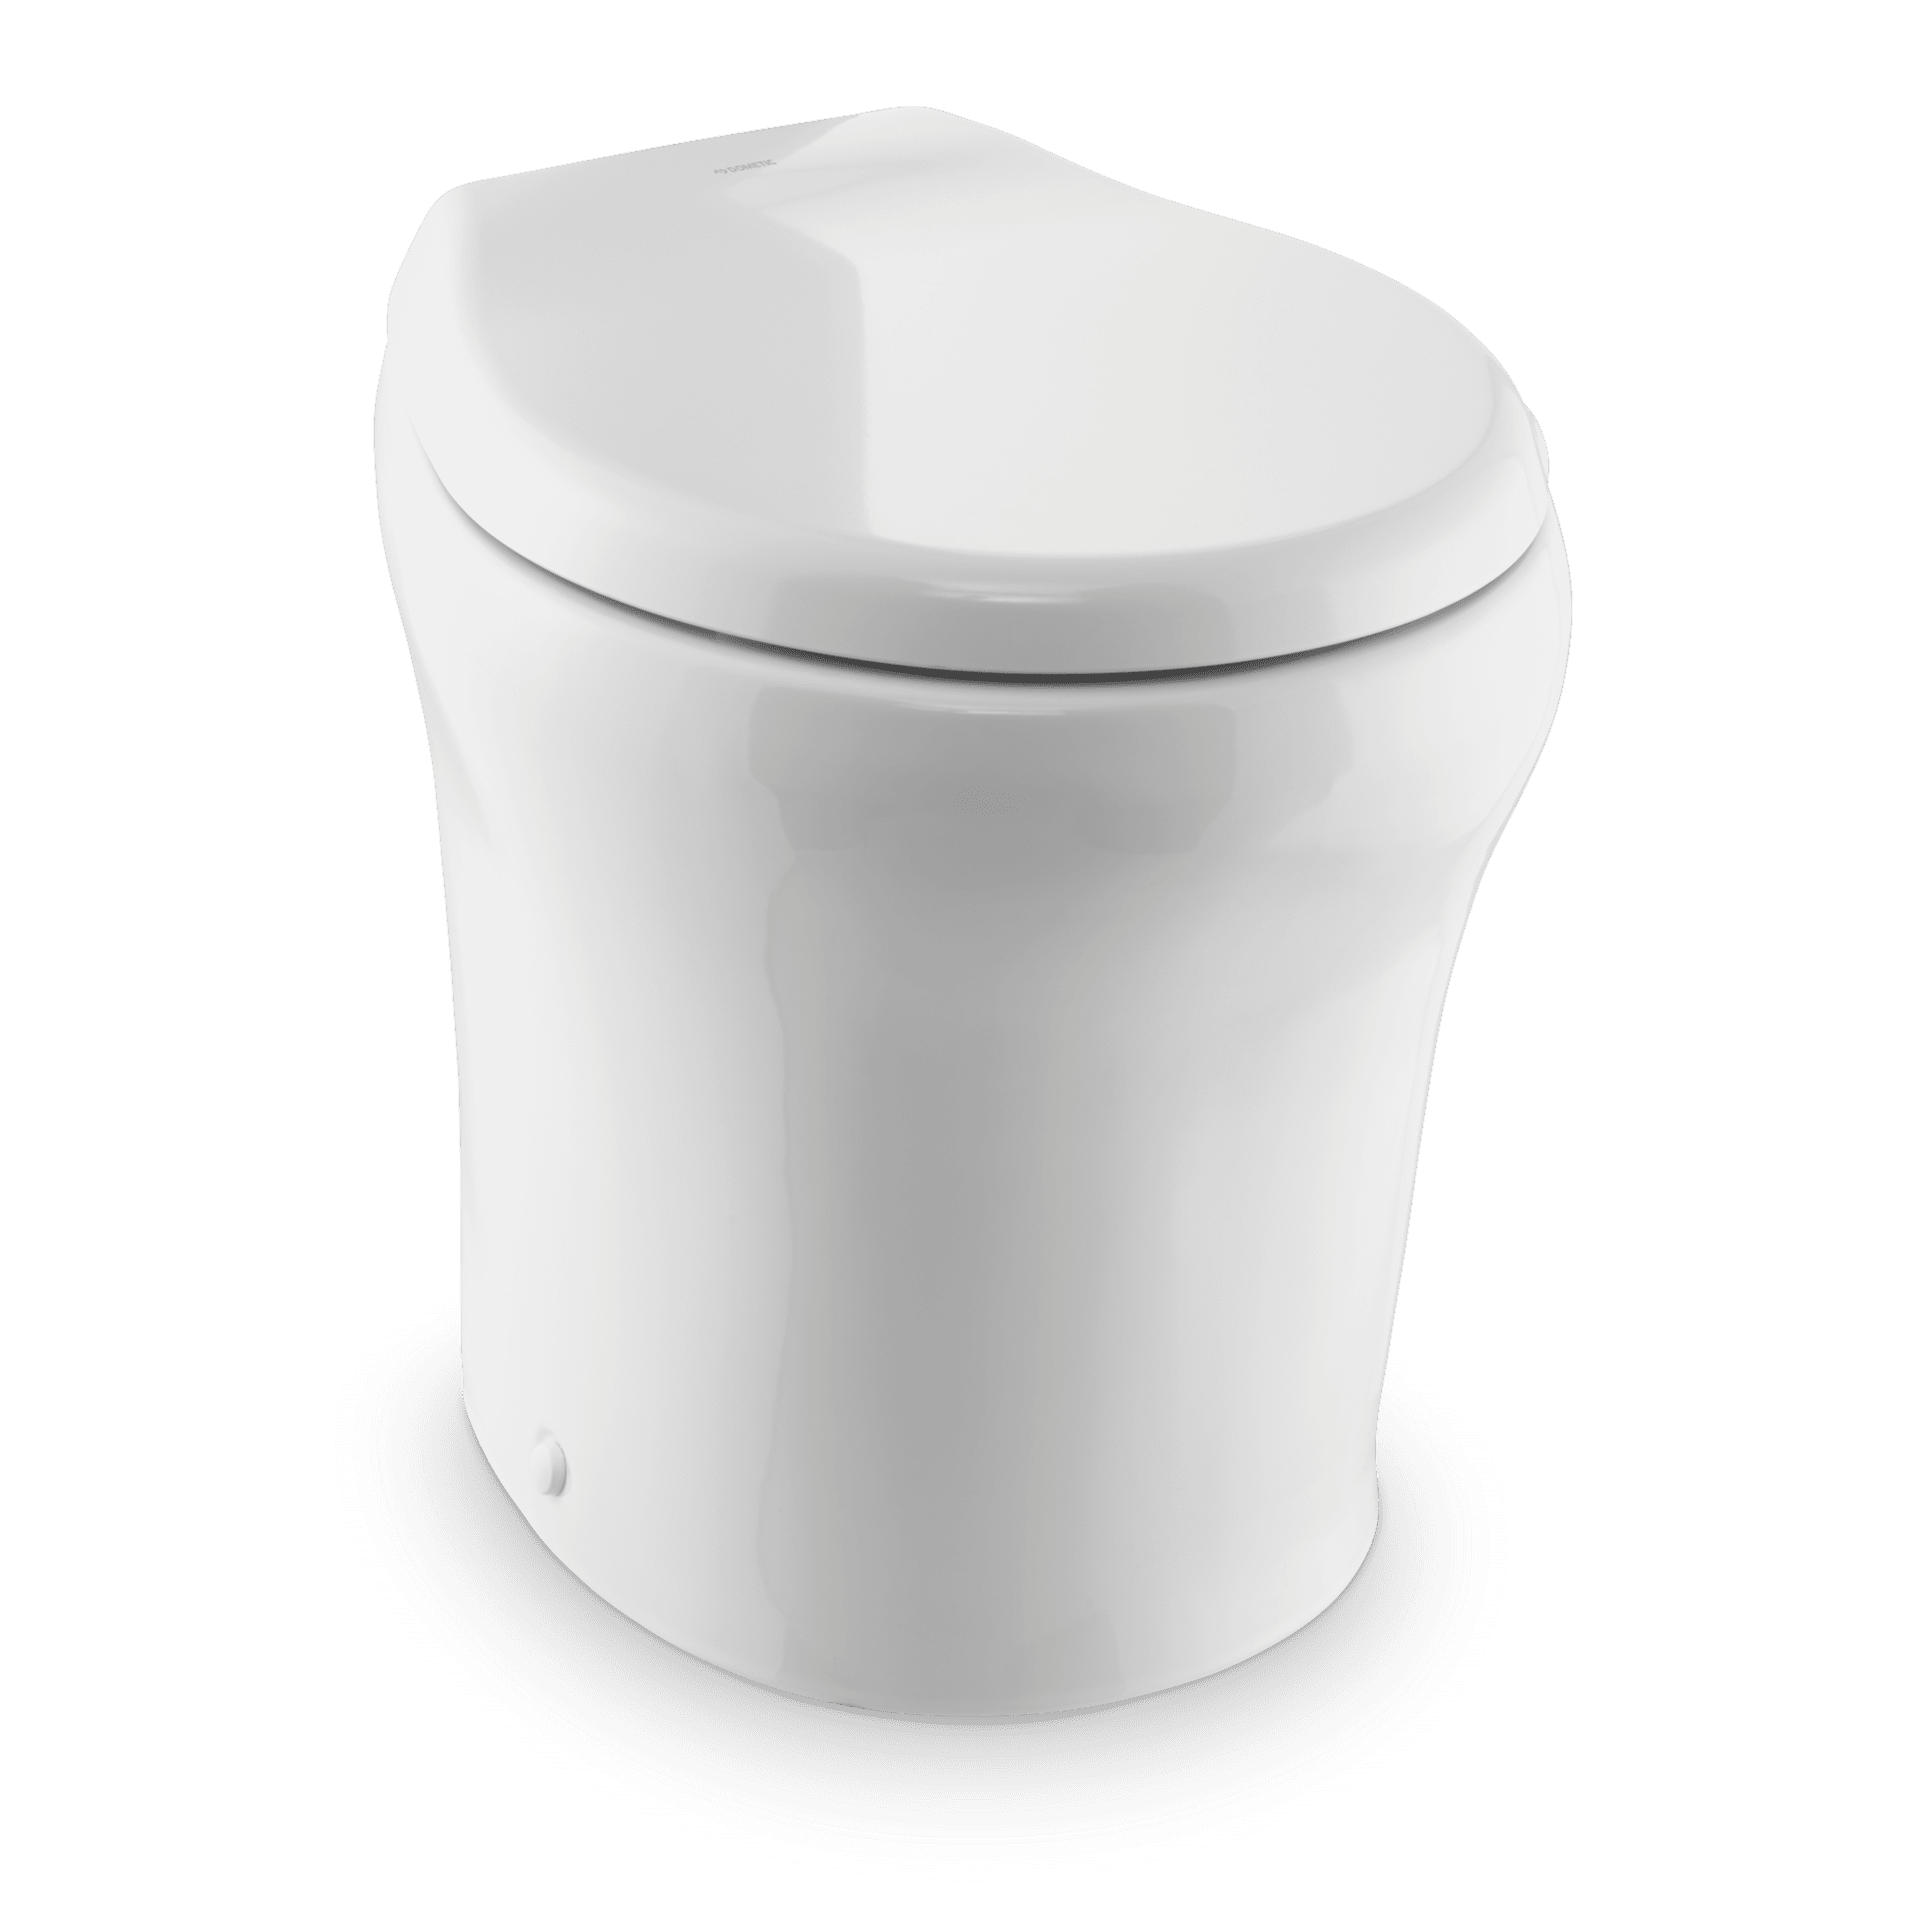 Dometic MasterFlush MF 8940 - Electric macerator toilet, standard ...